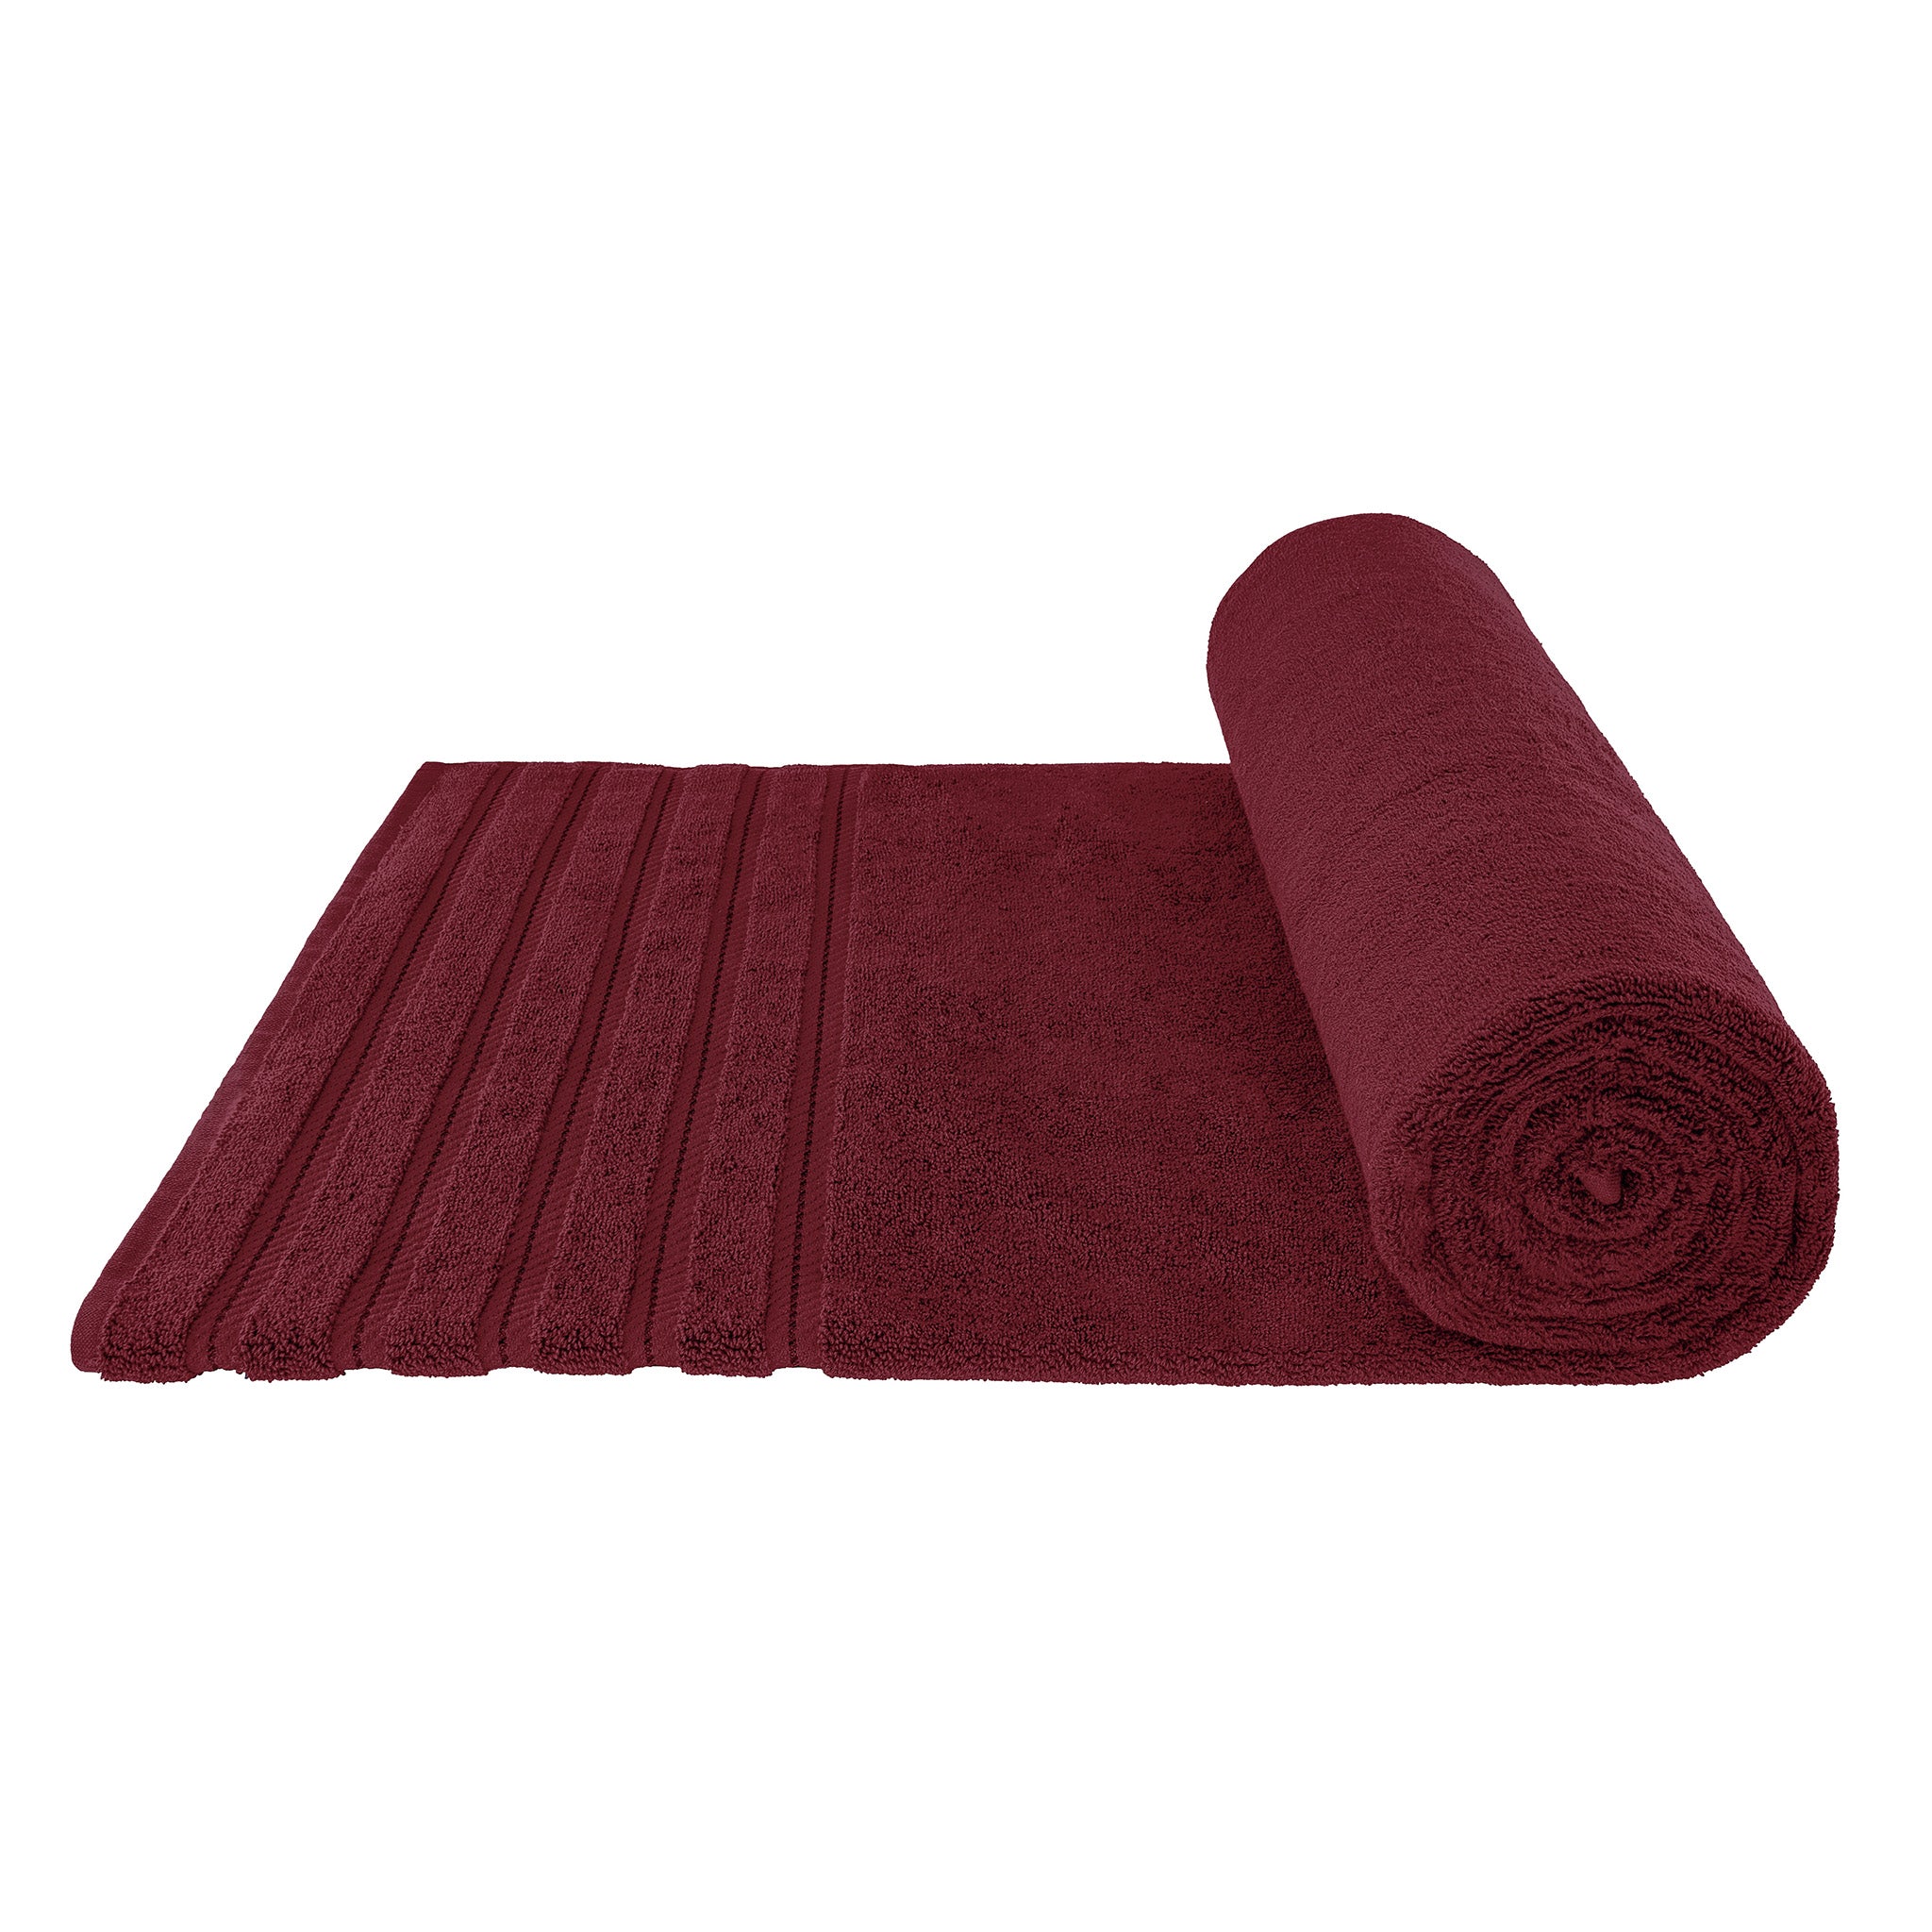 American Soft Linen 35x70 Inch 100% Turkish Cotton Jumbo Bath Sheet bordeaux-red-6